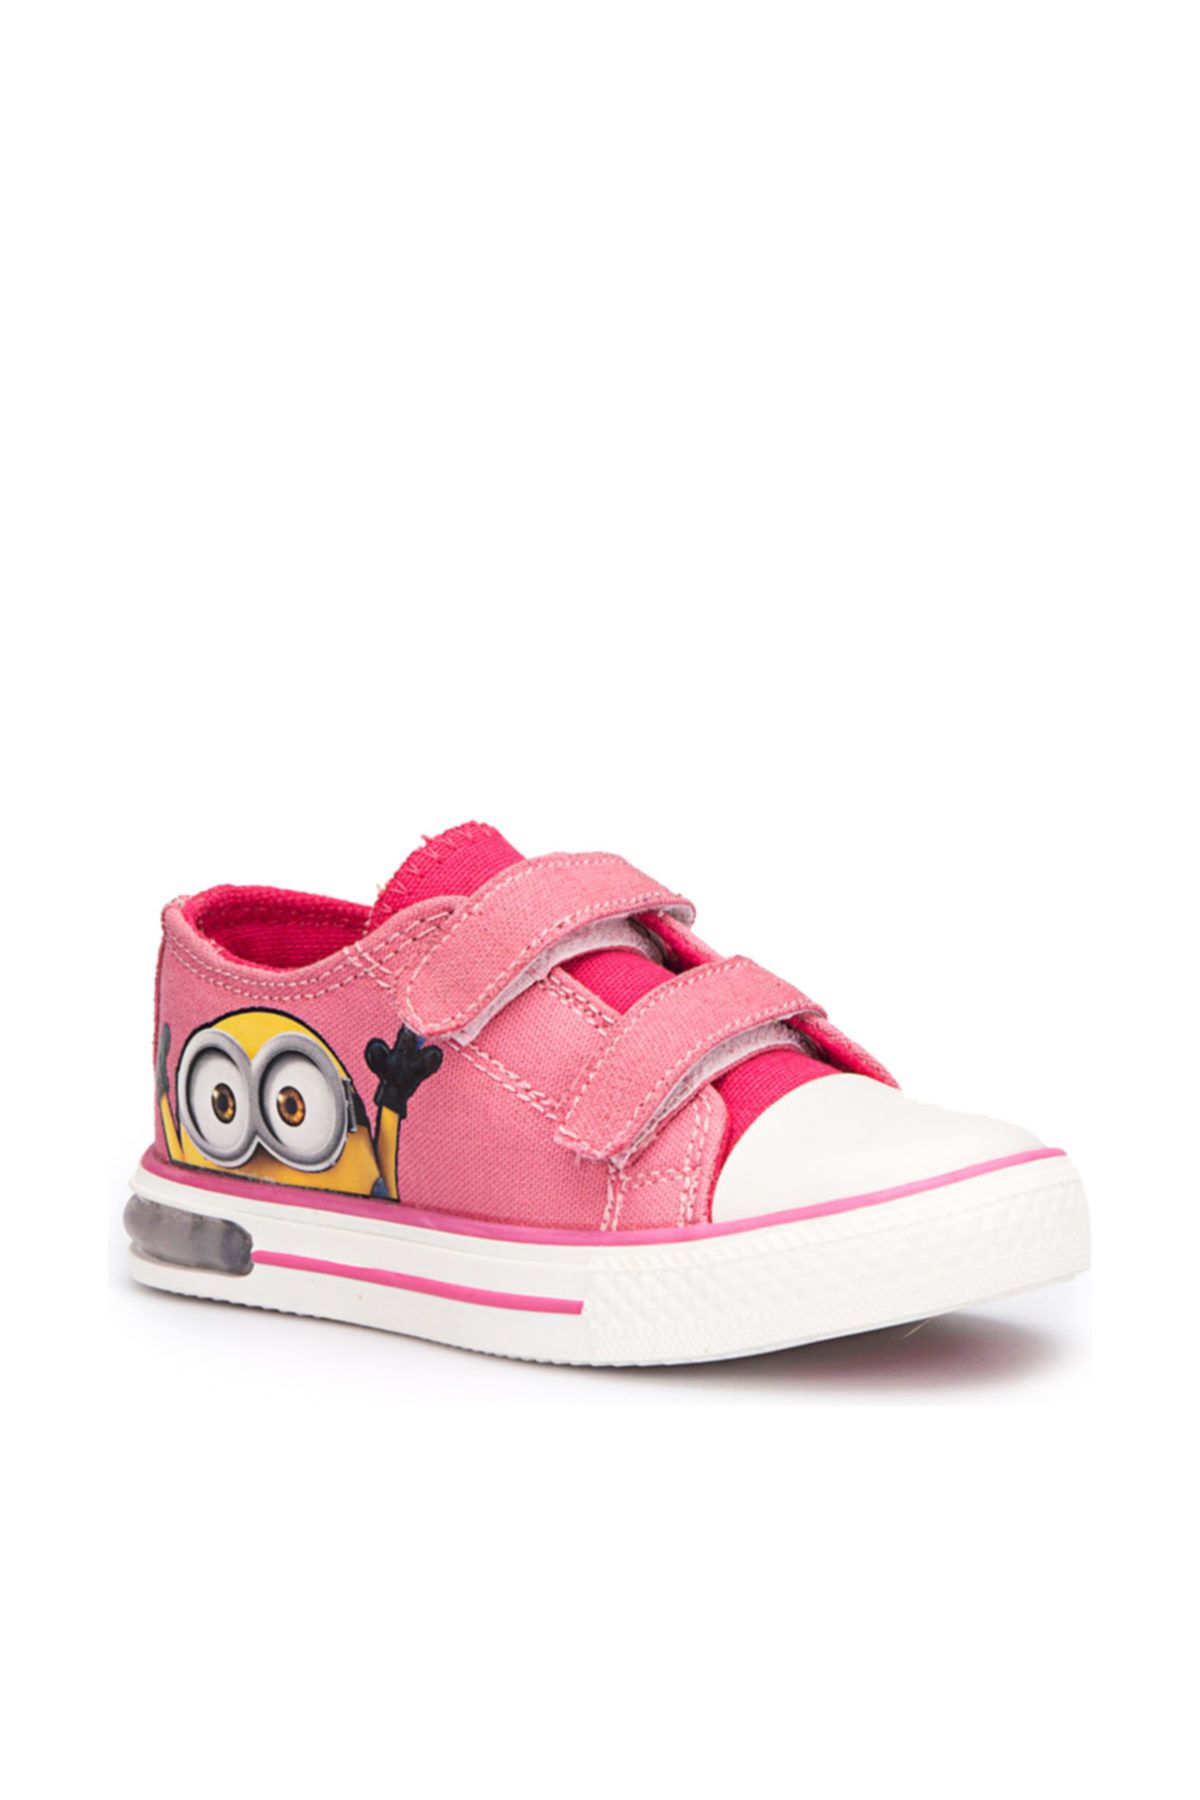 Minions ZETSU Pembe Kız Çocuk Sneaker 100252890